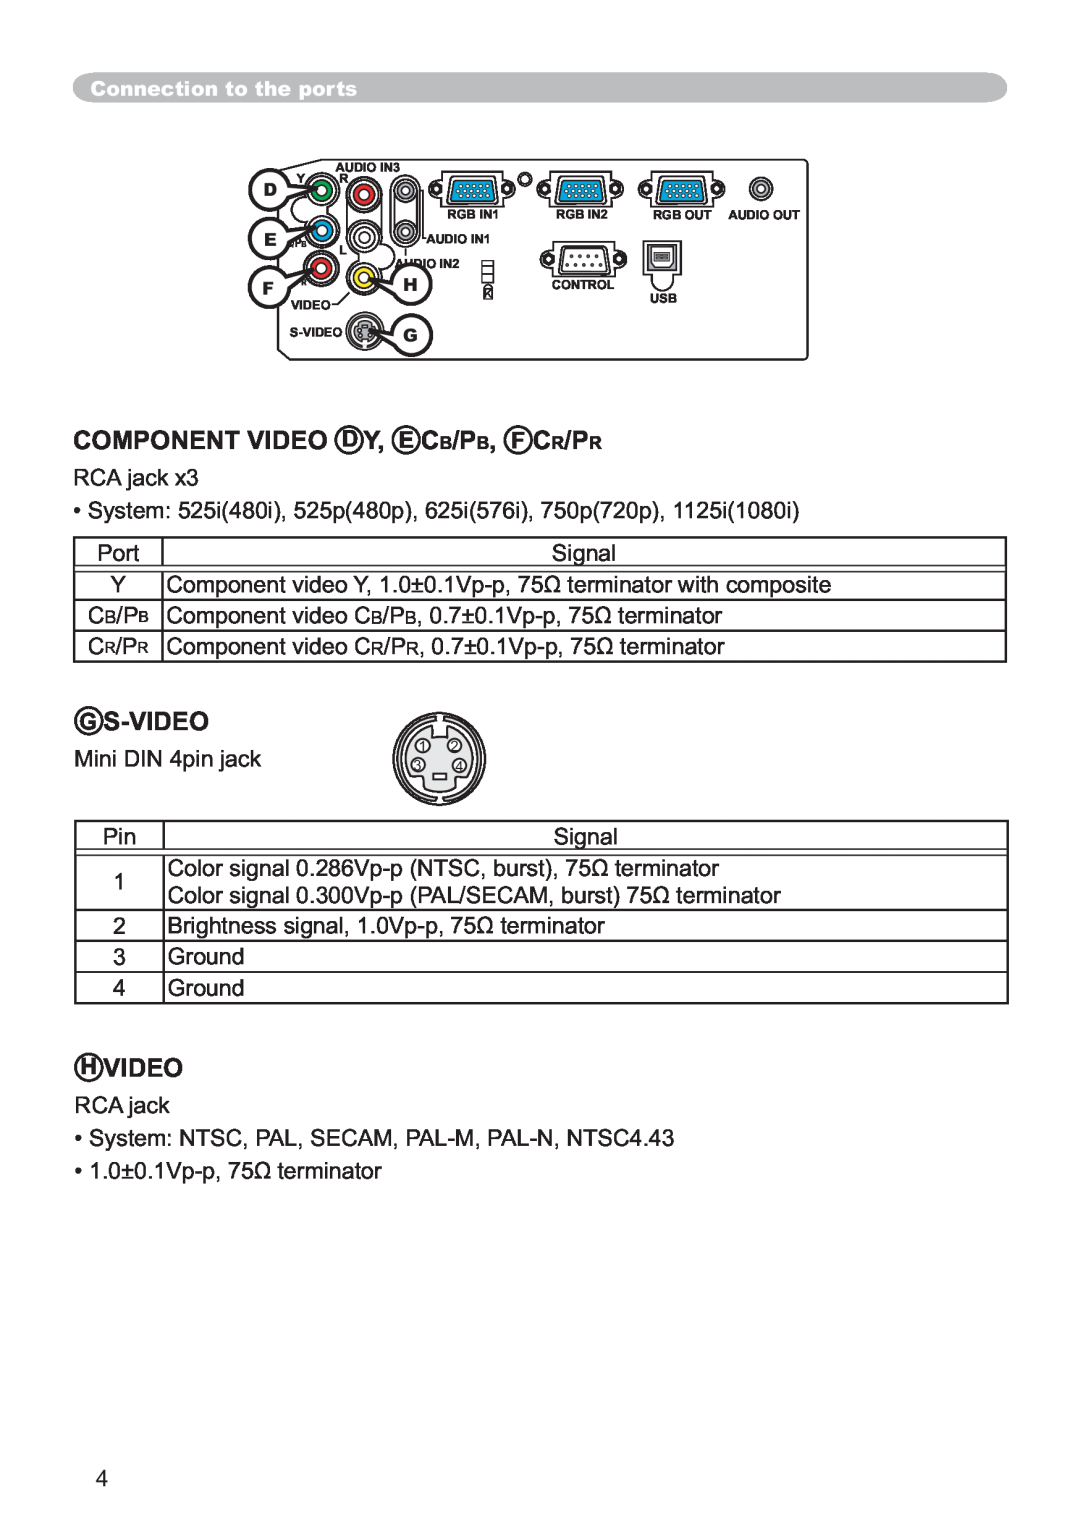 Hitachi ED-X12 user manual Component Video D Y, E Cb/Pb, F Cr/Pr, Gs-Video, Hvideo 